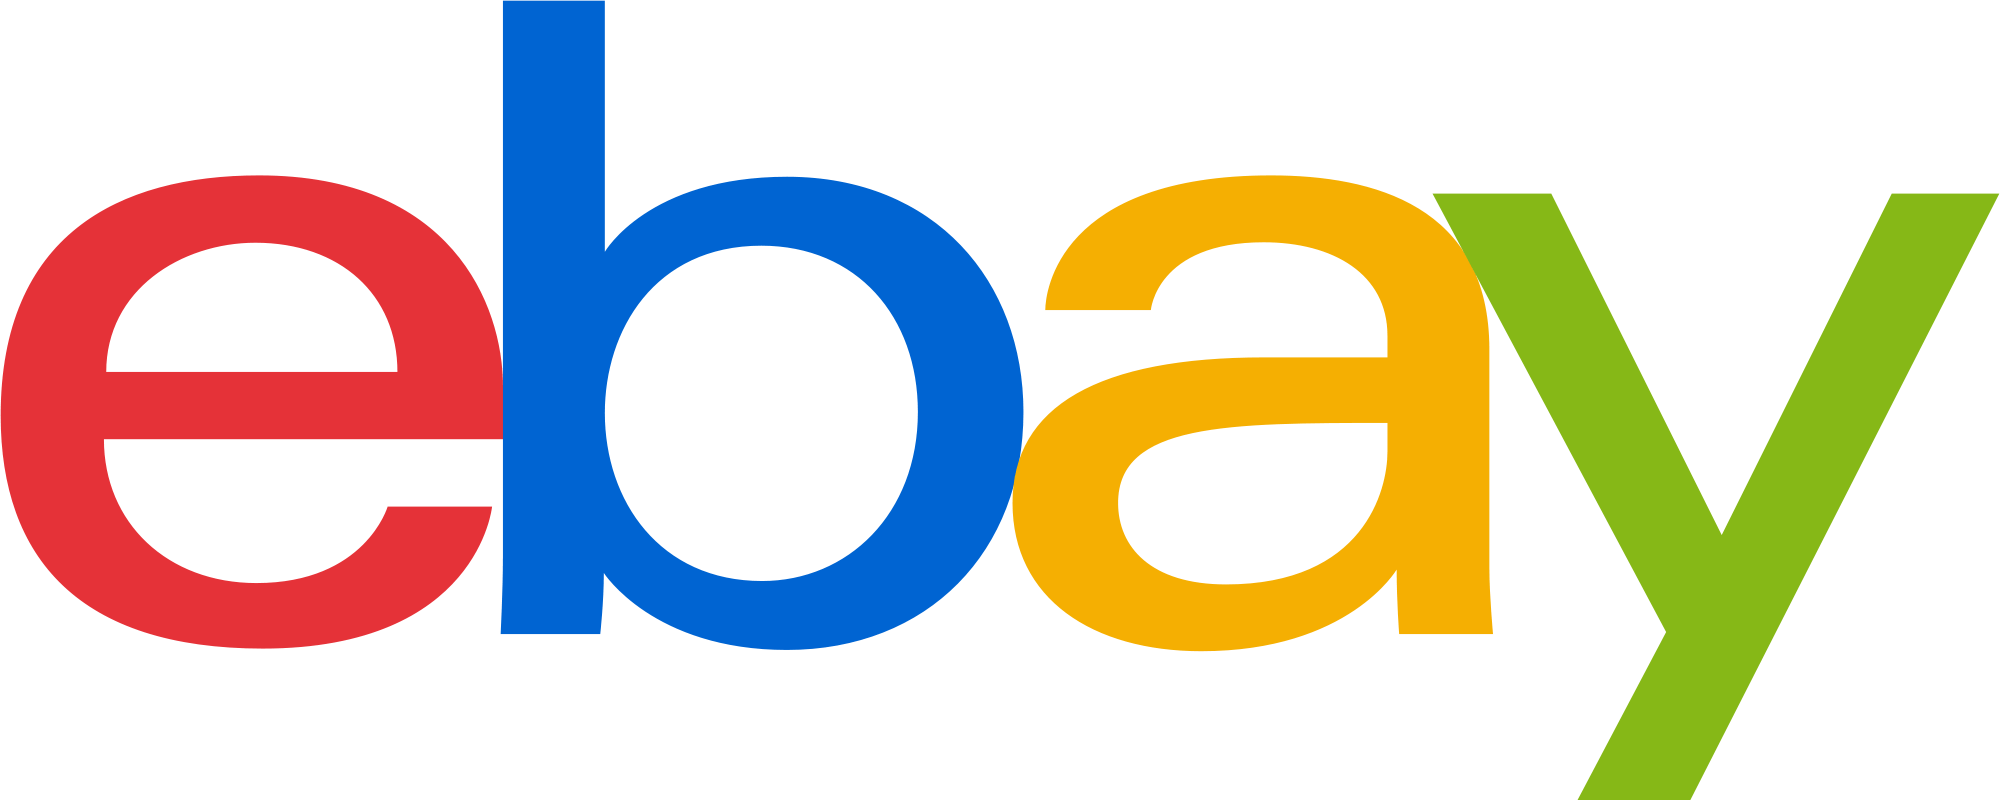 Find Us On eBay Logo - Ebay Logo Control Corporation